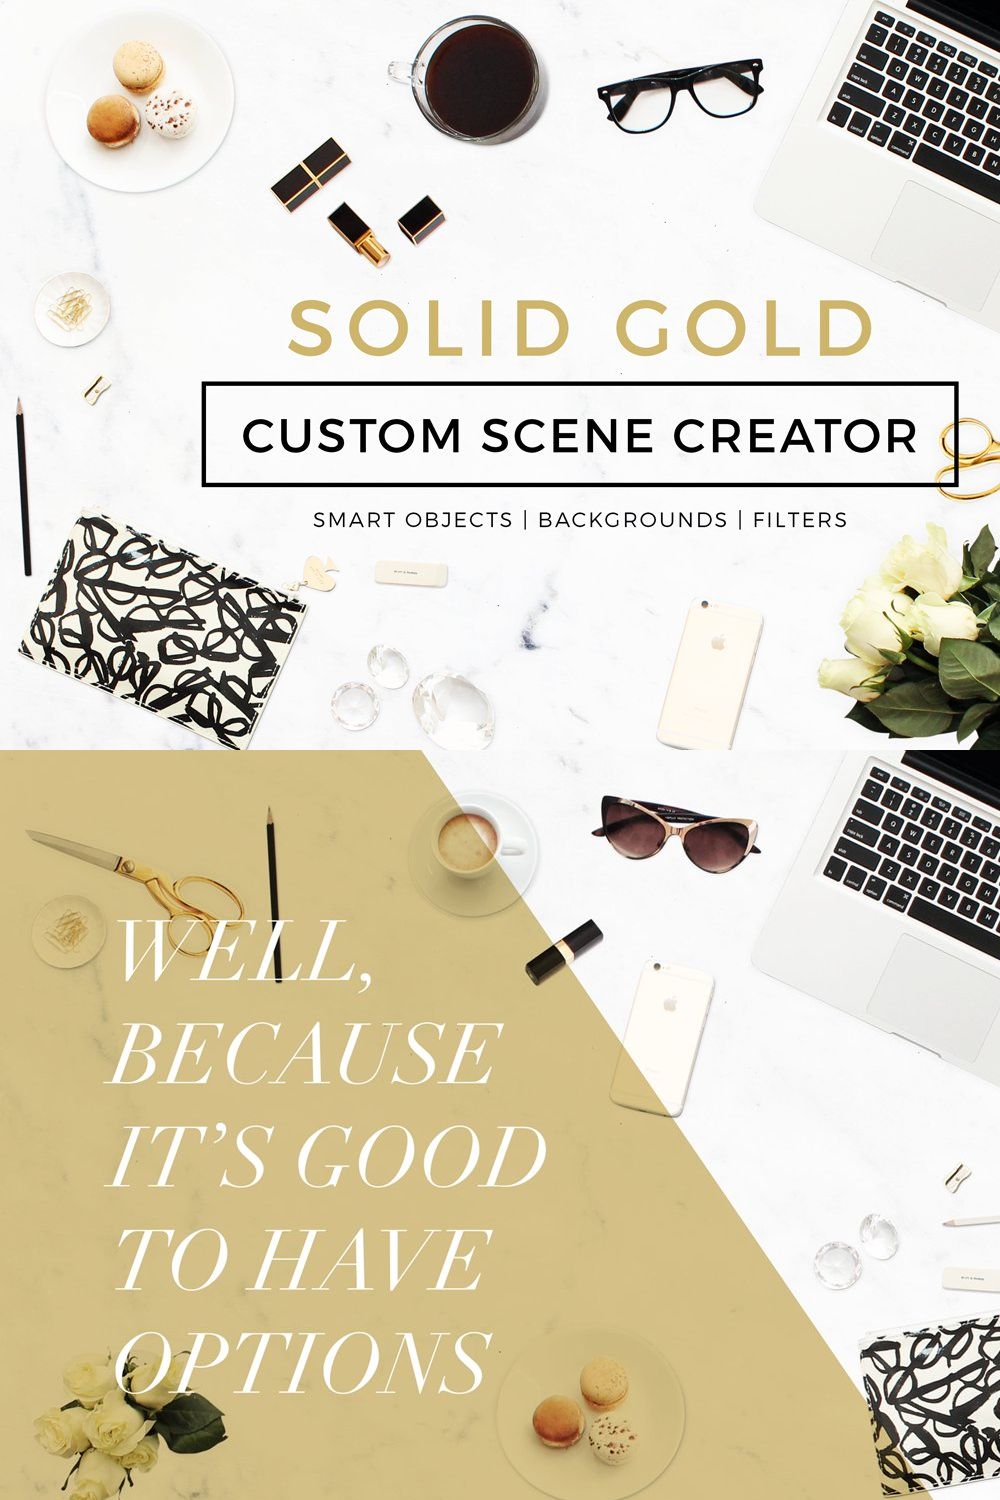 Custom Scene Creator- Solid Gold pinterest preview image.